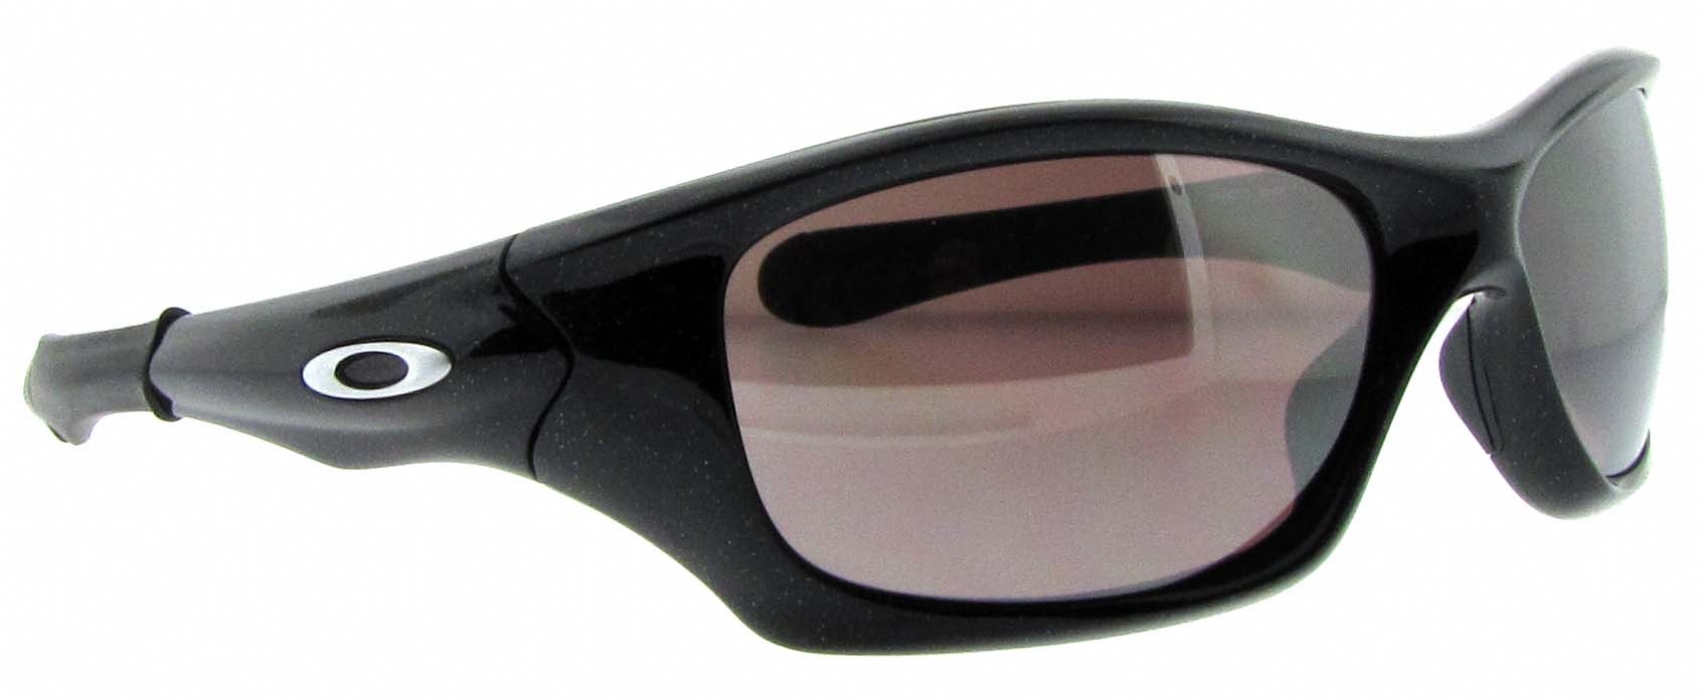 Oakley Pit Bull Sunglasses